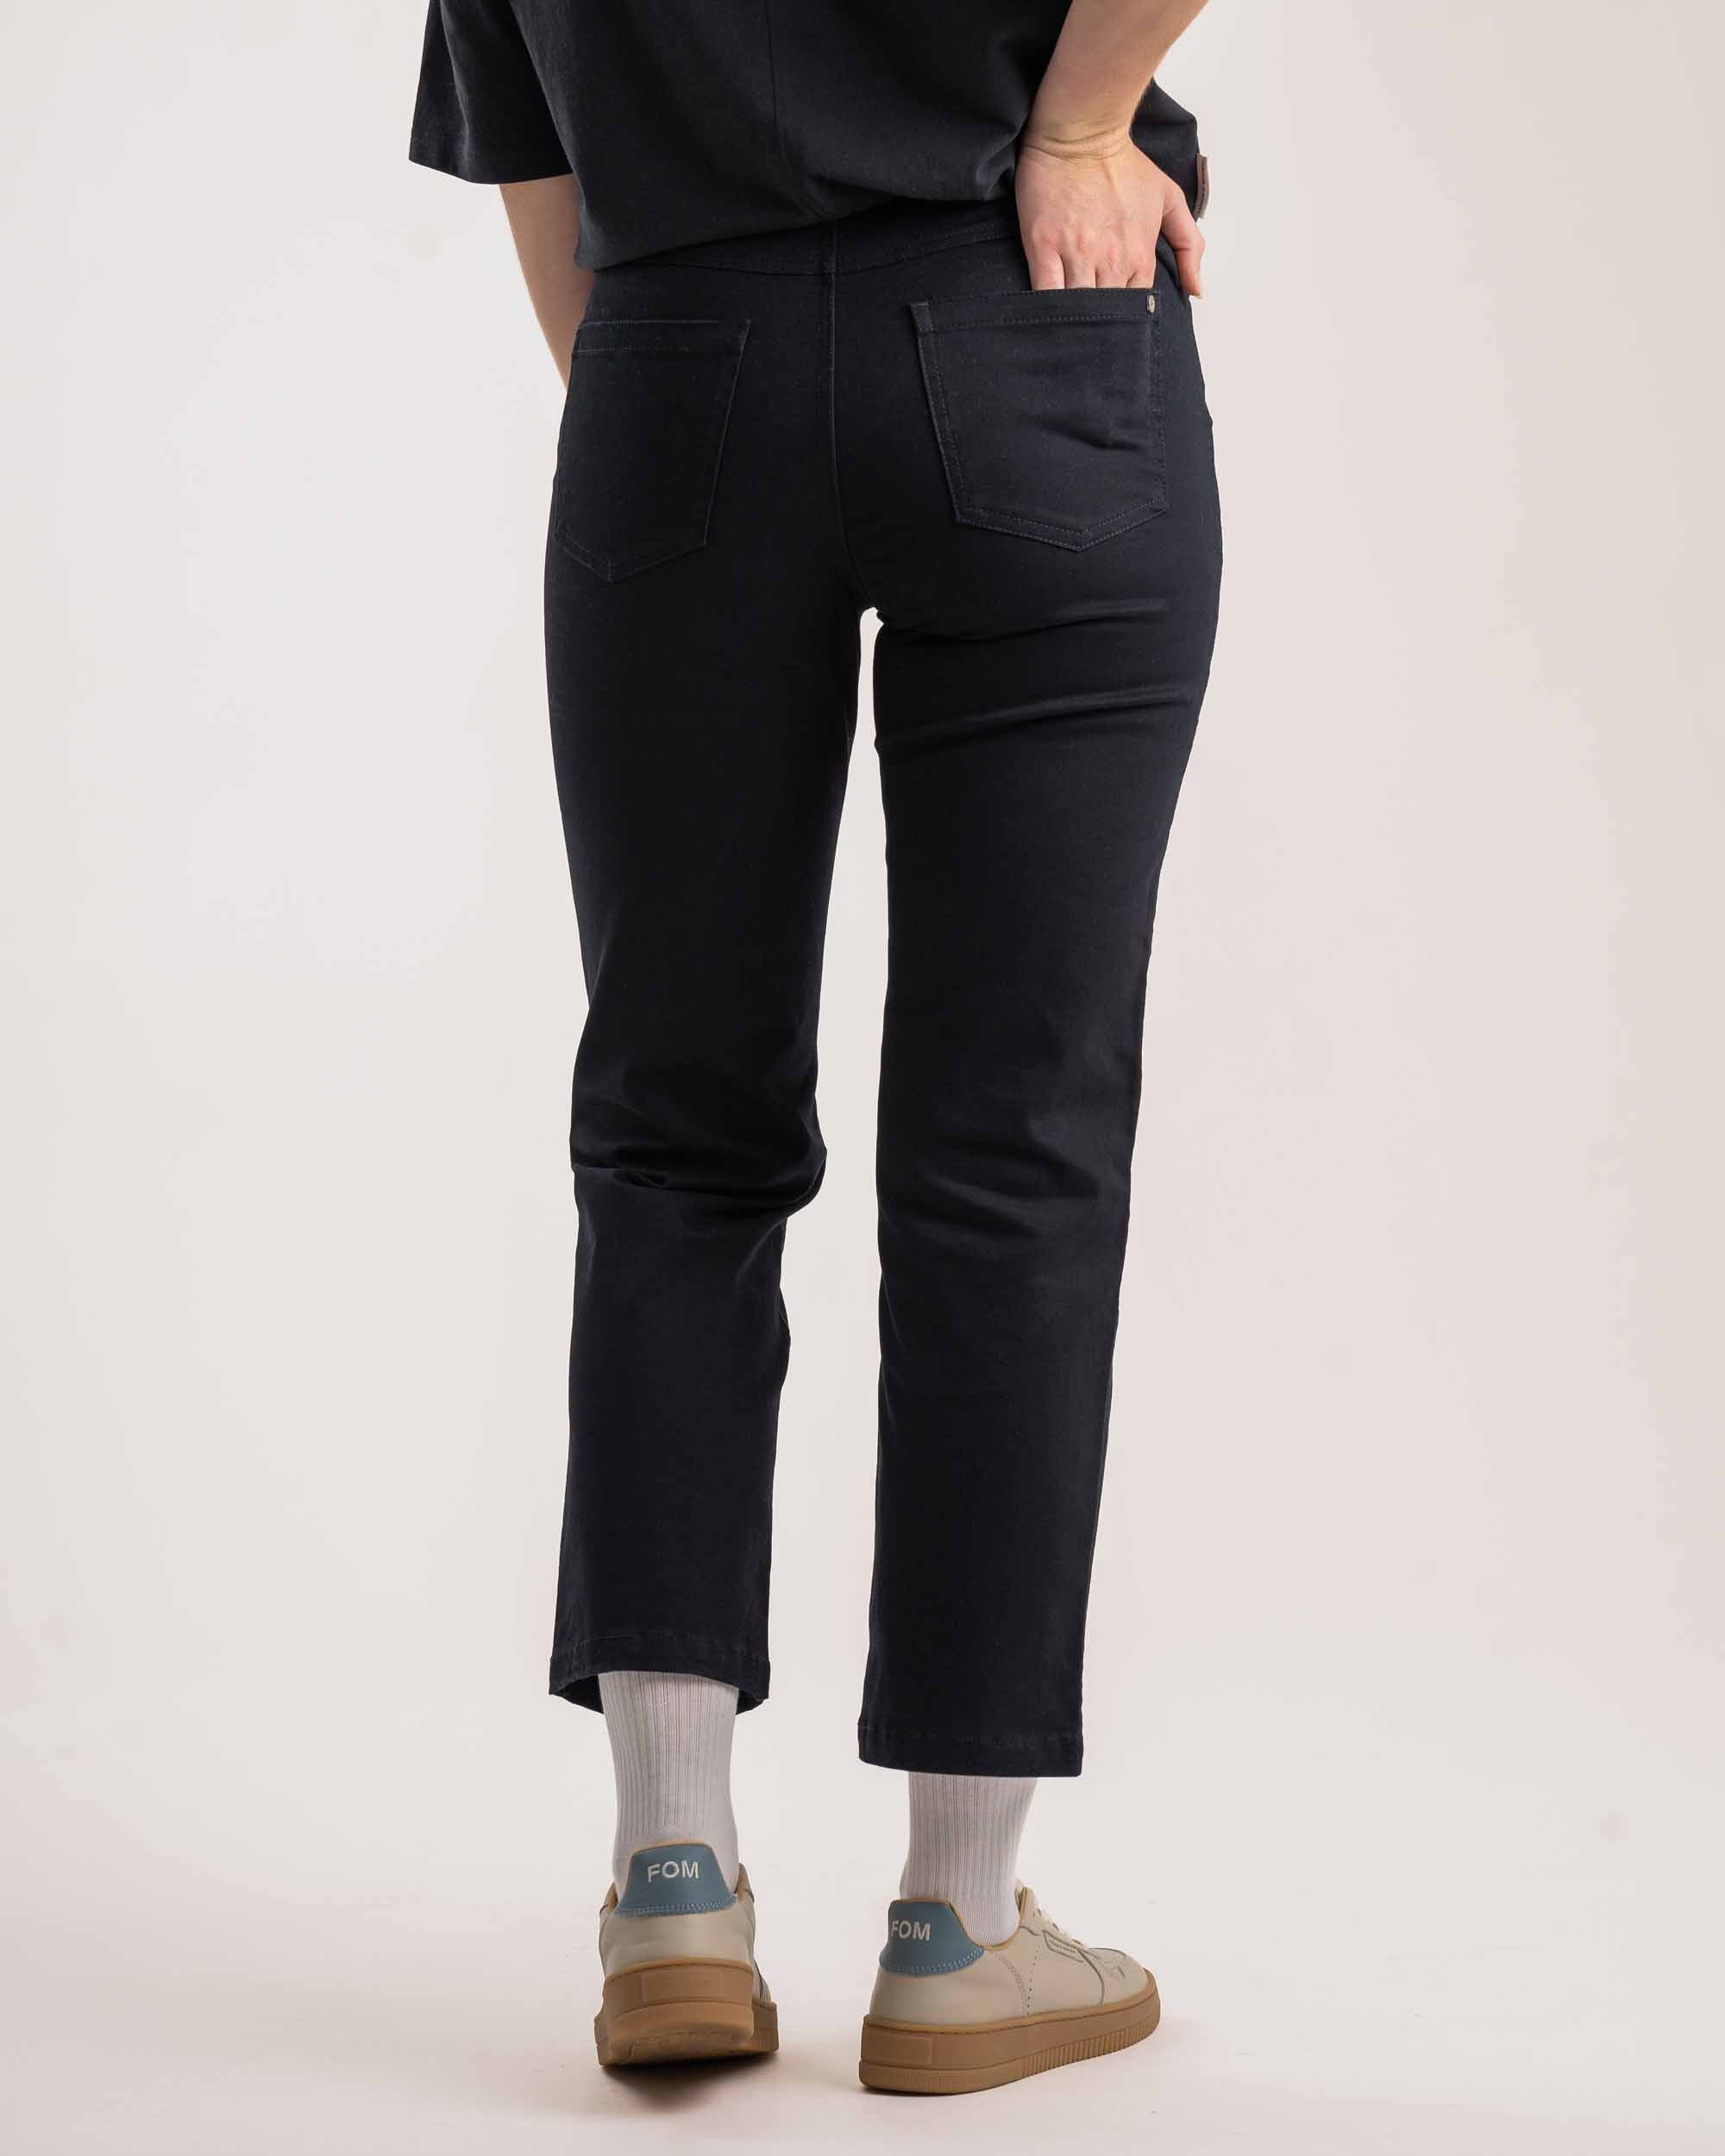 Ladies Regular Fit Pants - Black